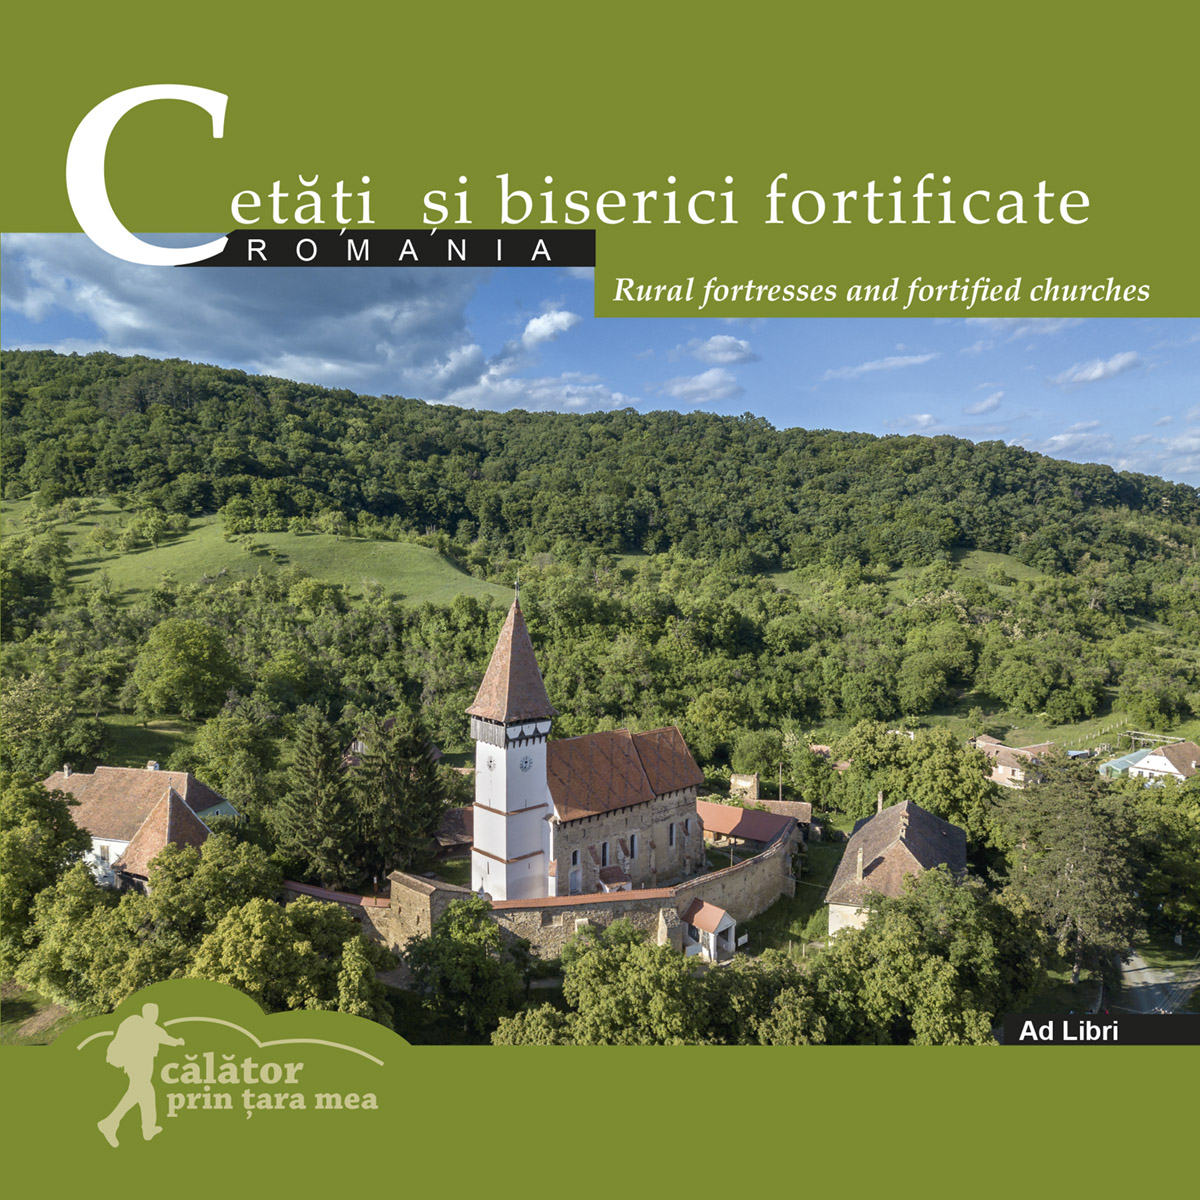 Cetati si biserici fortificate: Romania. Calator prin tara mea - Mariana Pascaru, Florin Andreescu